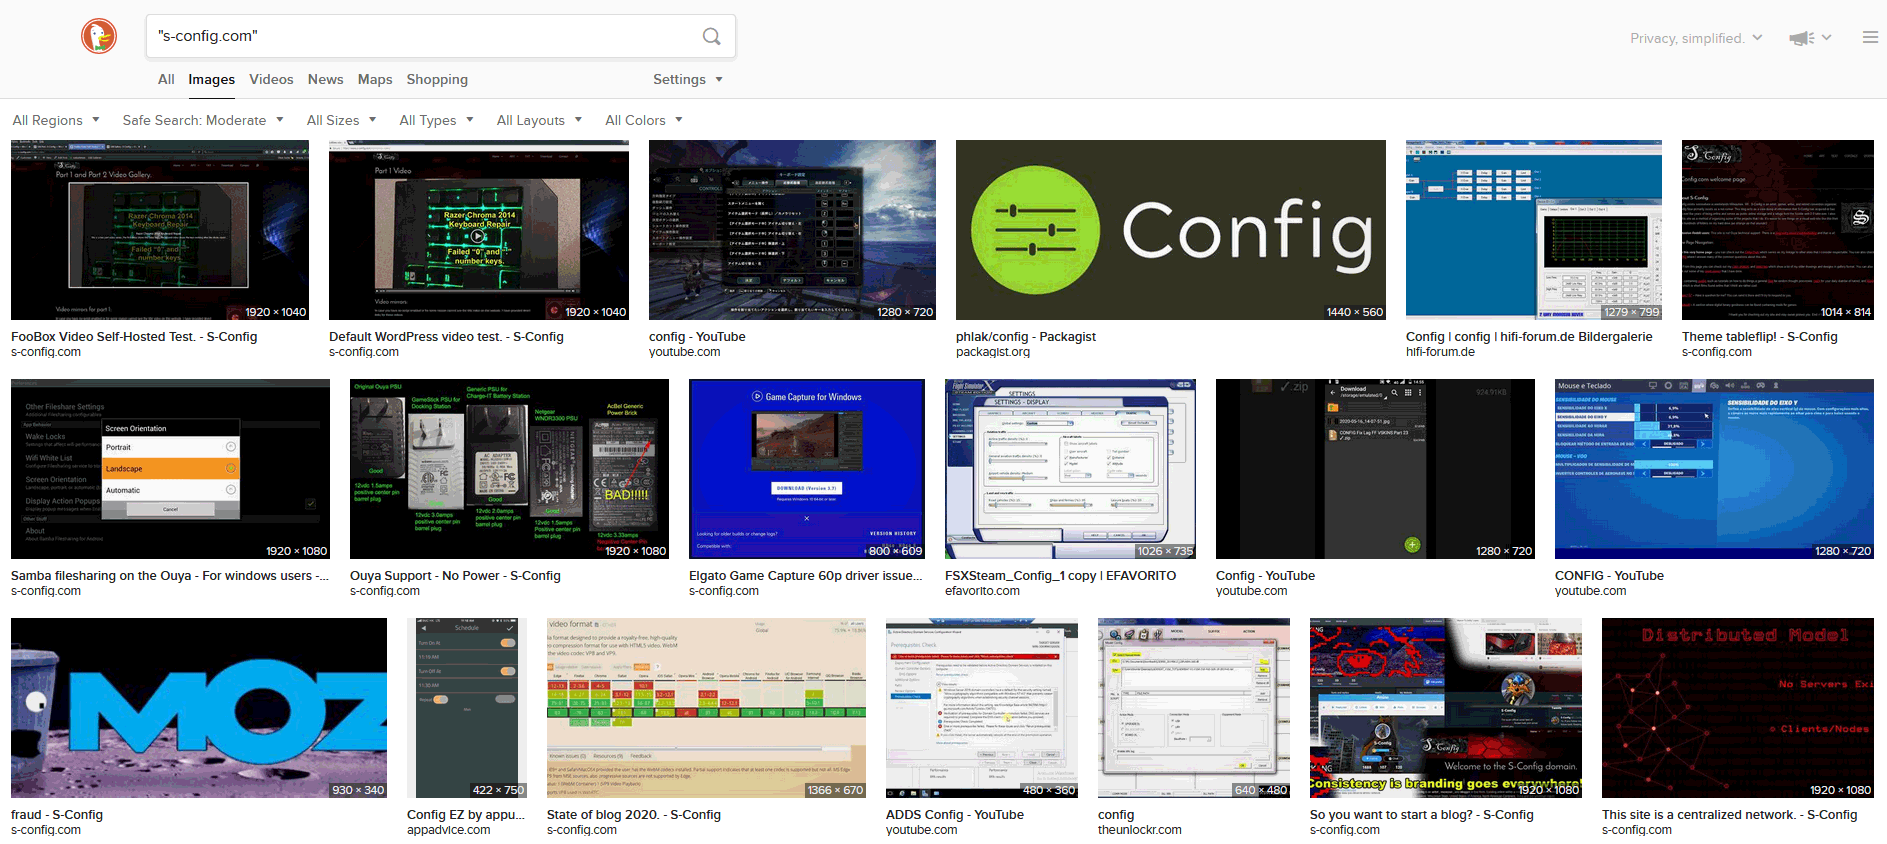 S-Config.com - DuckDuckGo's imaging results.